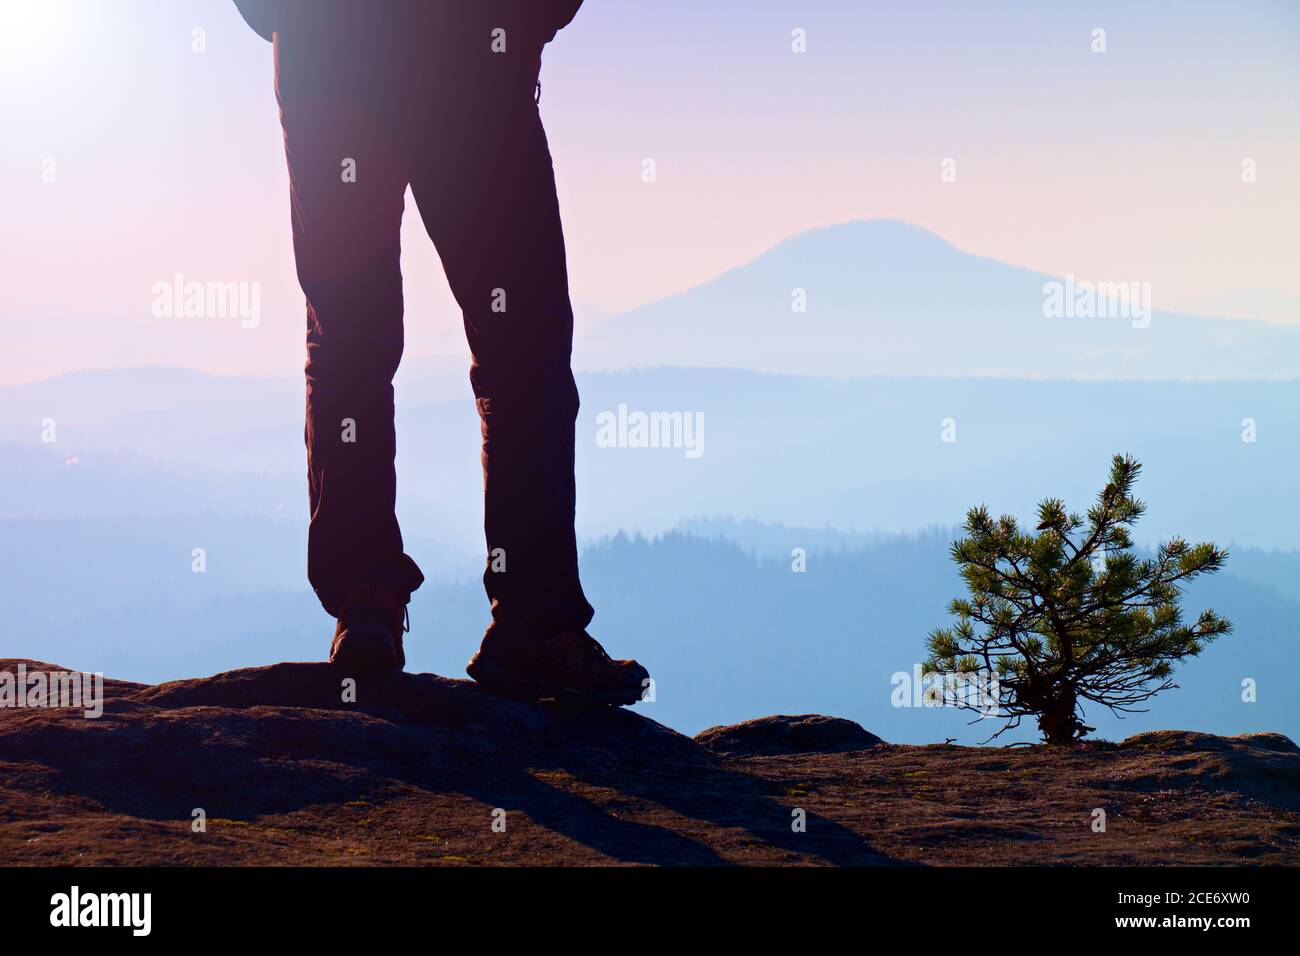 Man hiker legs in tourist boots stand on mountain rocky peak. Small pine bonsai. Stock Photo